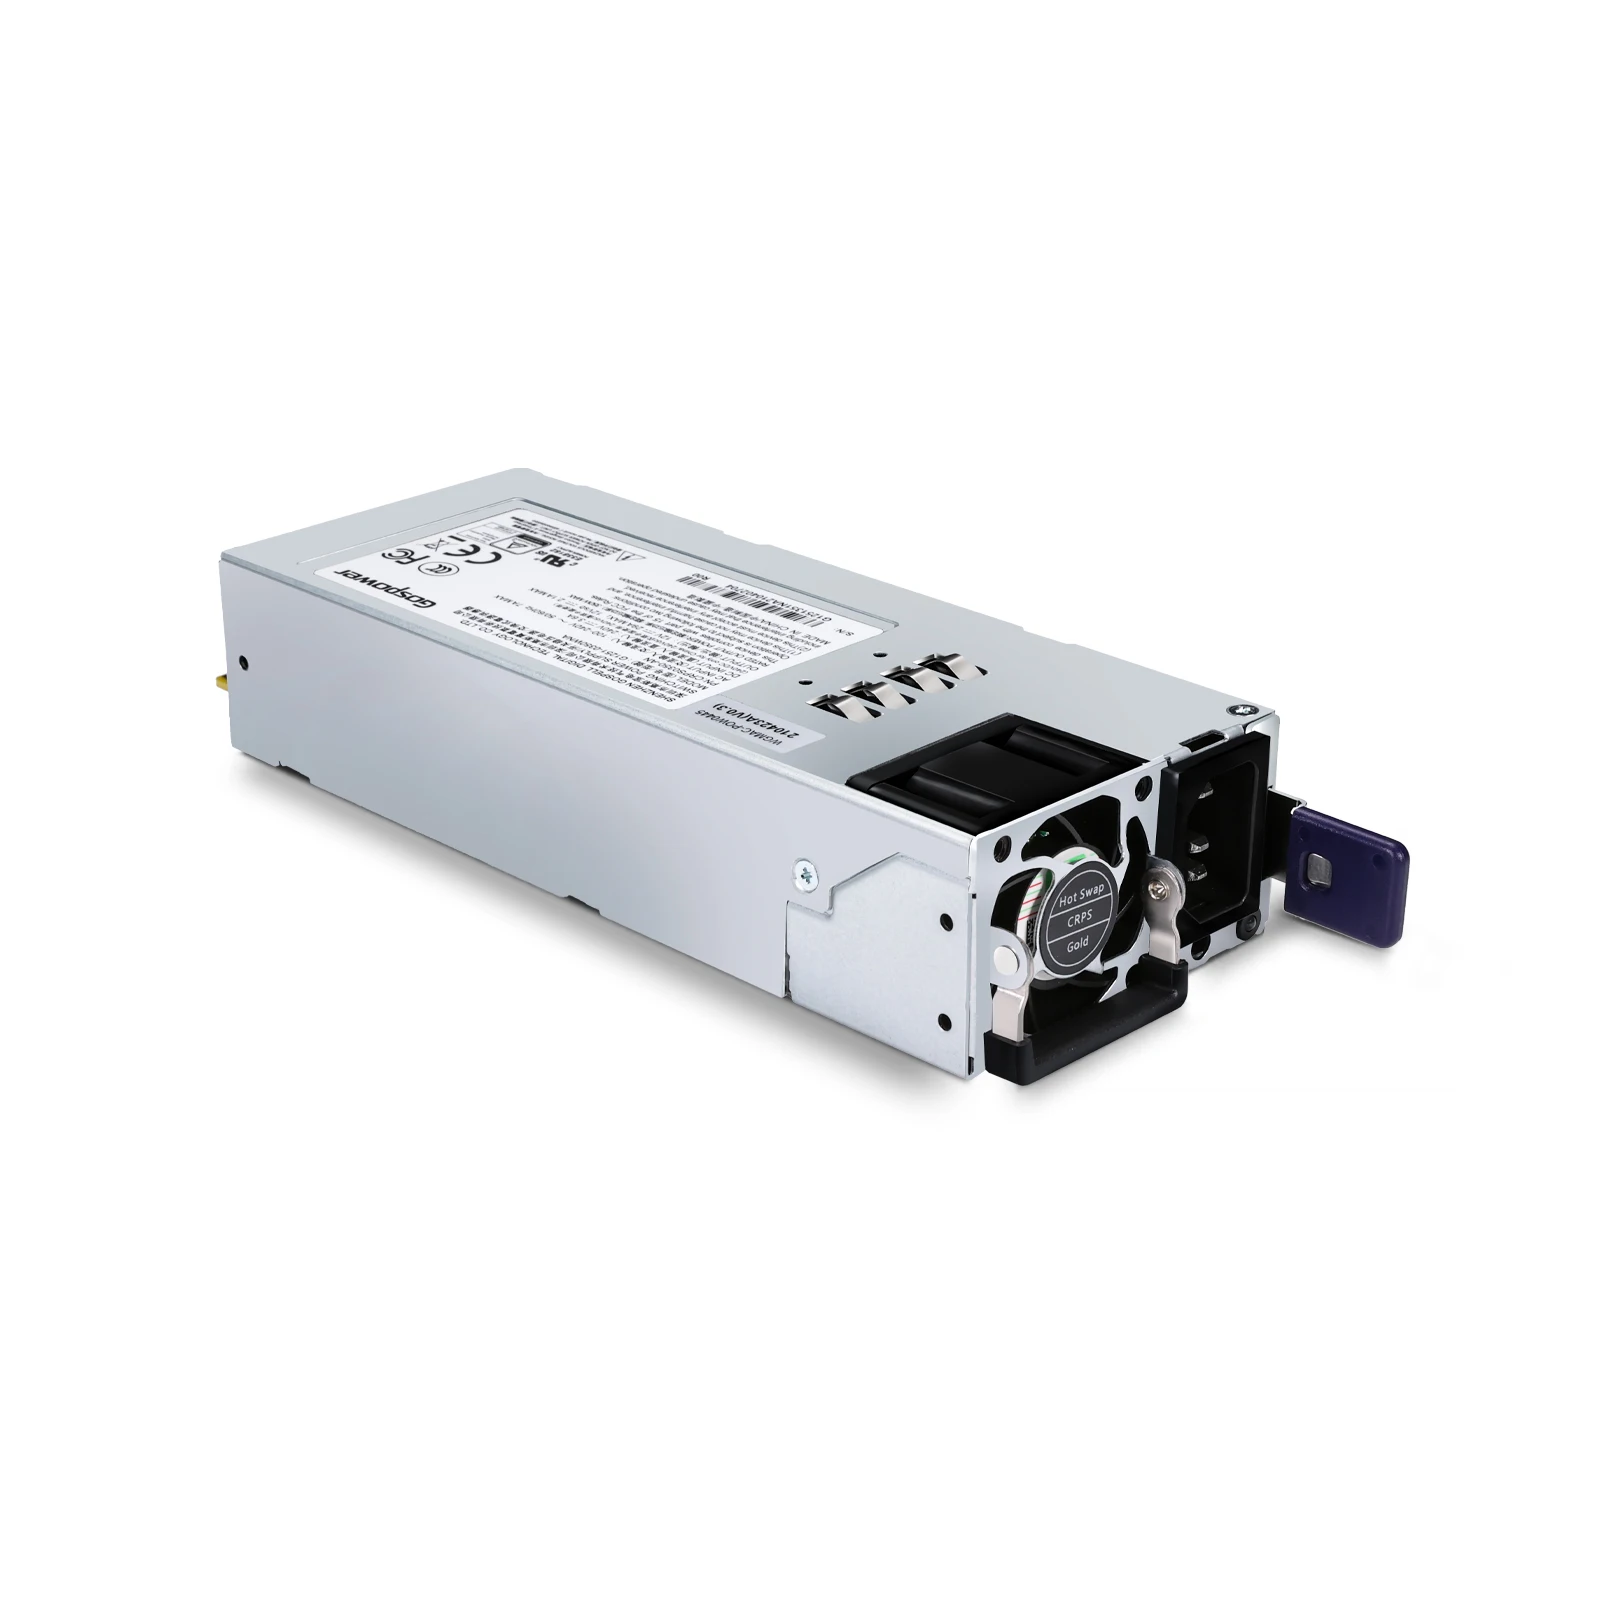 48-Port 10G Ethernet L3 Stackable Fiber Switch with 2x 40G QSFP+ Ports and  100G Uplinks, S7300-48X2Q4C - QSFPTEK